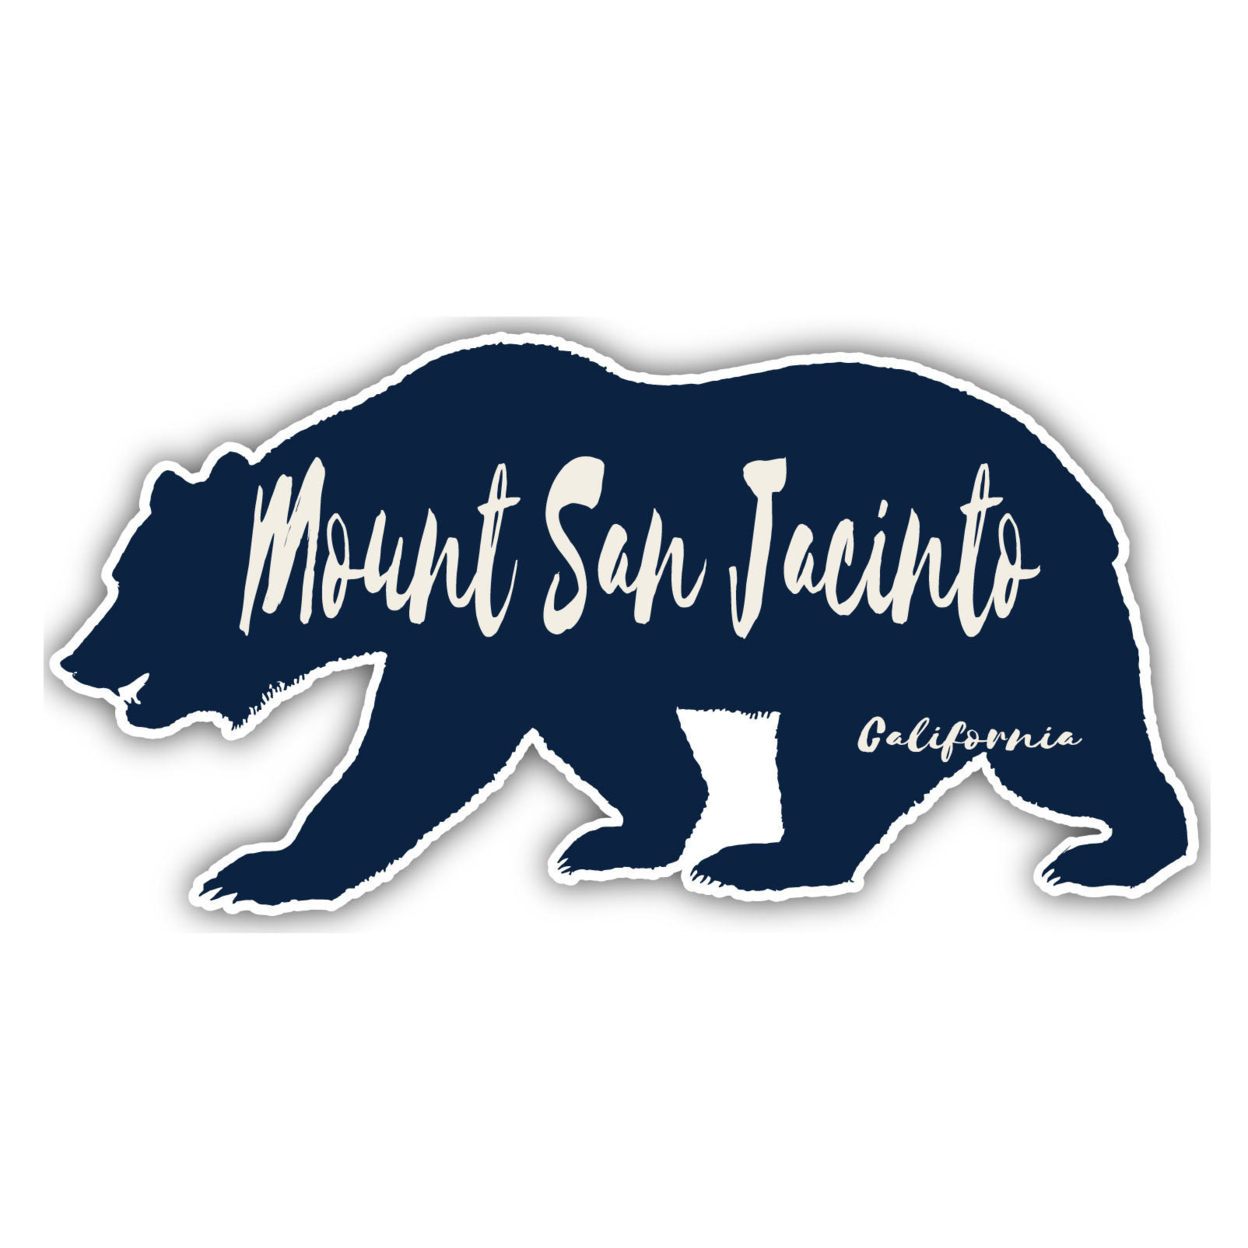 Mount San Jacinto California Souvenir Decorative Stickers (Choose Theme And Size) - Single Unit, 2-Inch, Tent